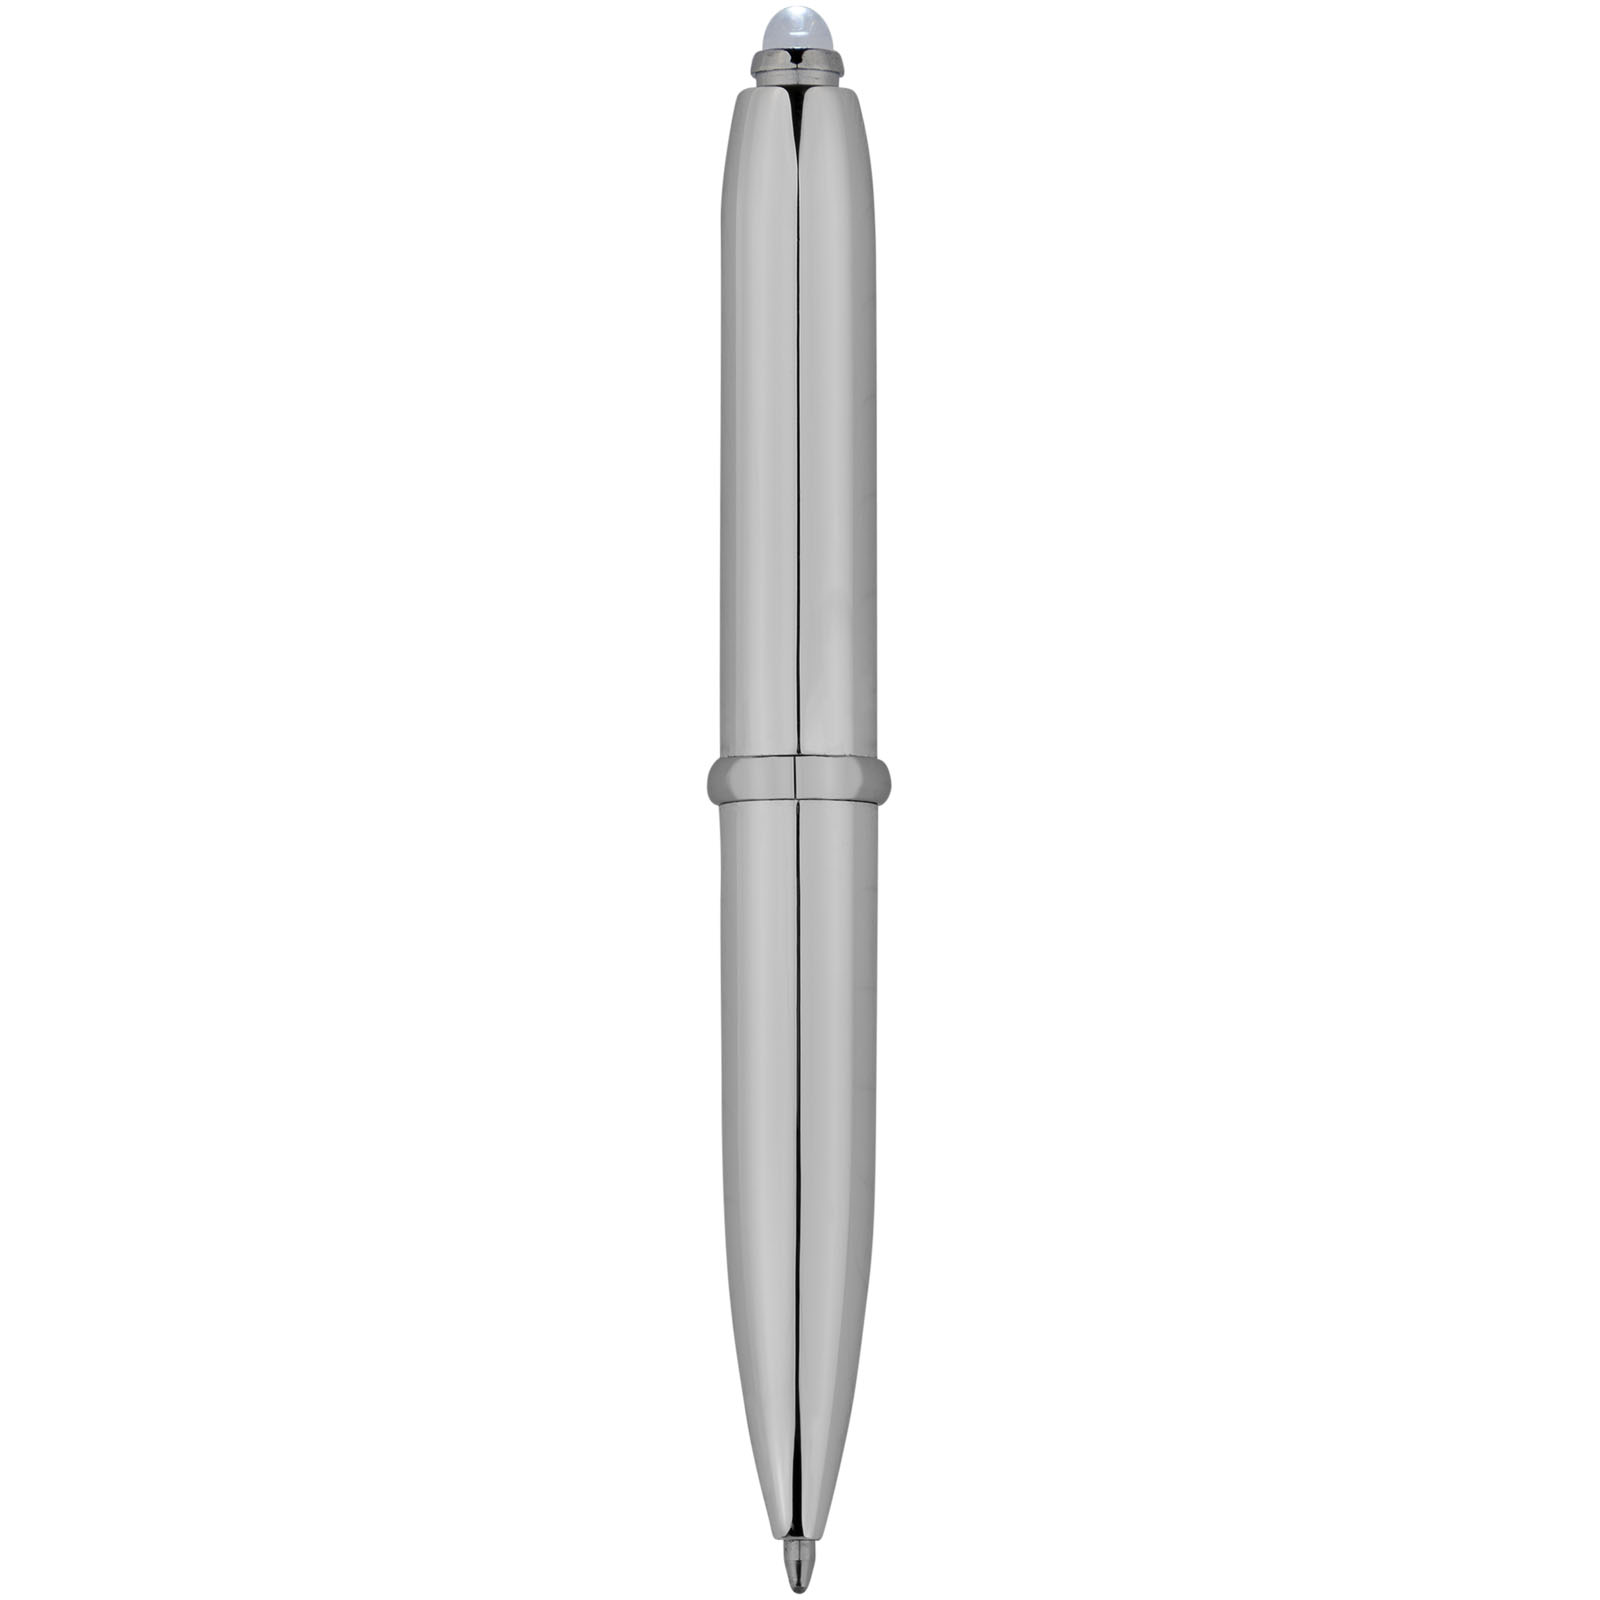 Advertising Ballpoint Pens - Xenon stylus ballpoint pen with LED light - 4